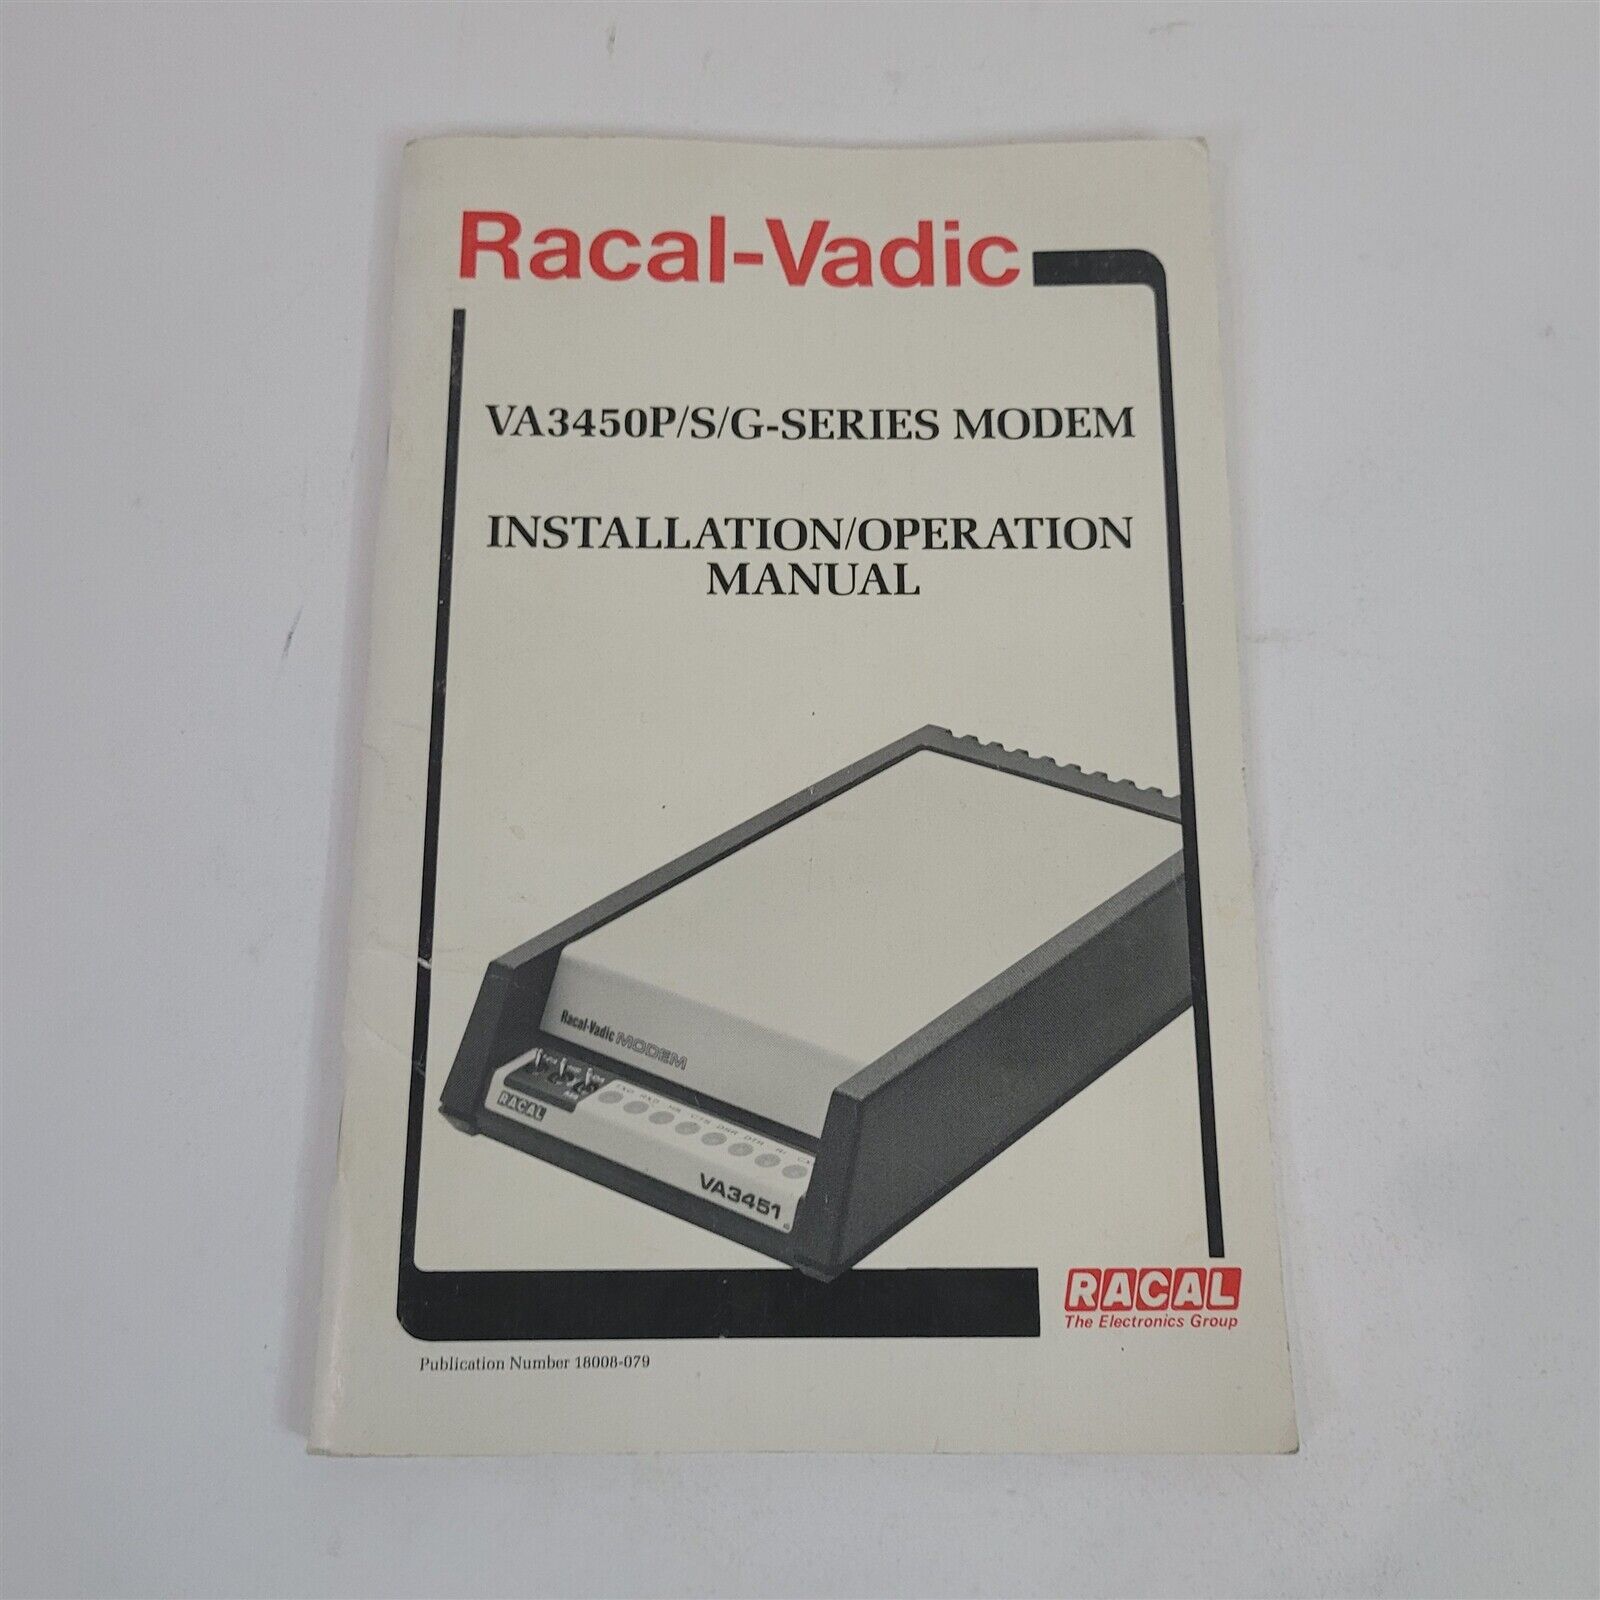 Vintage 1982 Original Racal-Vadic VA3450P/S/G-Series Modem Operation Manual